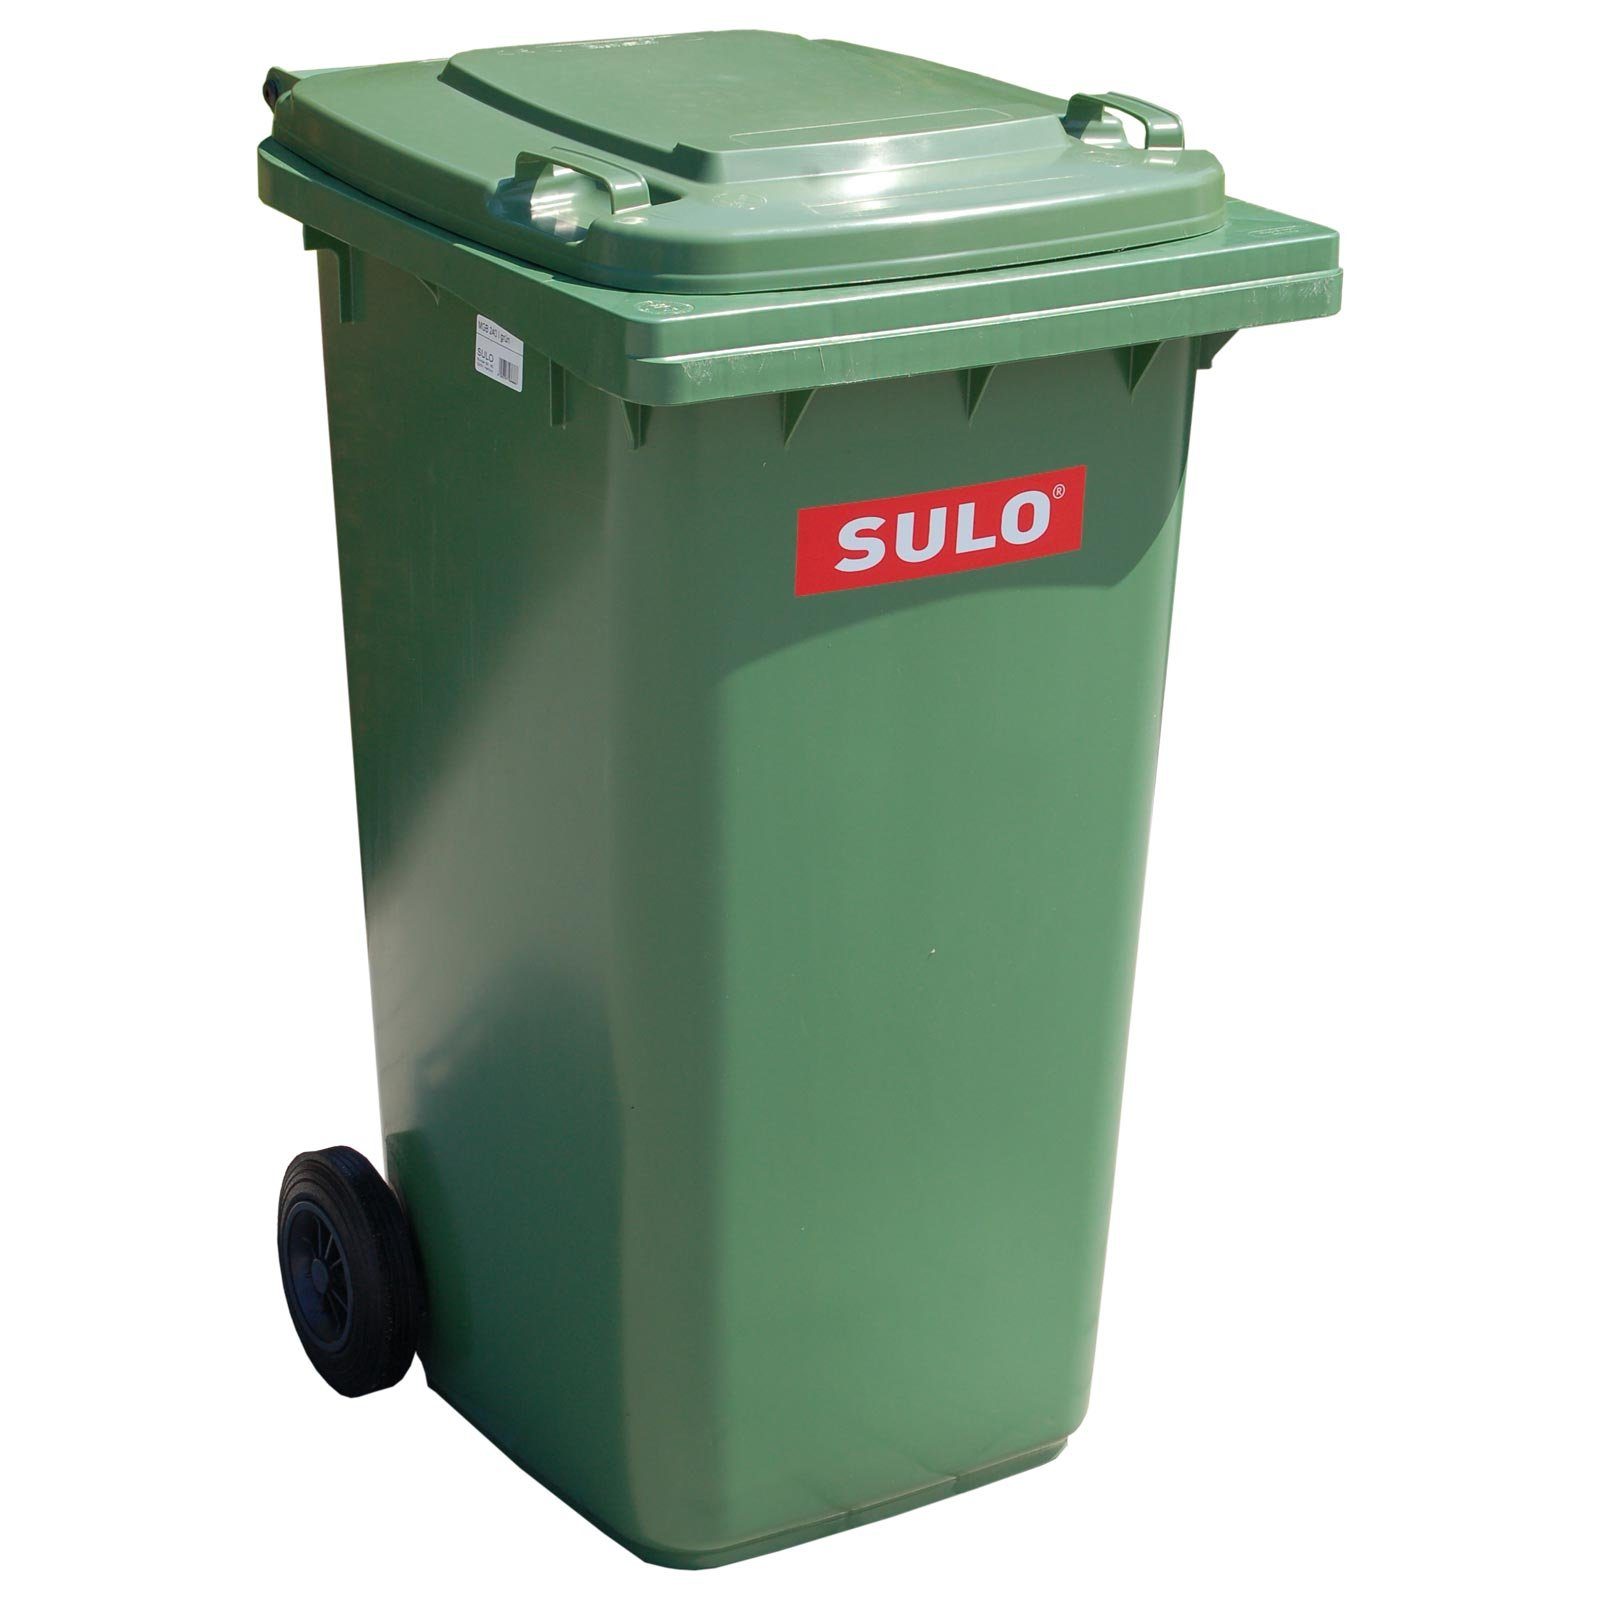 L SULO Grün Mülltrennsystem Behältersysteme 2-Rad SULO 240